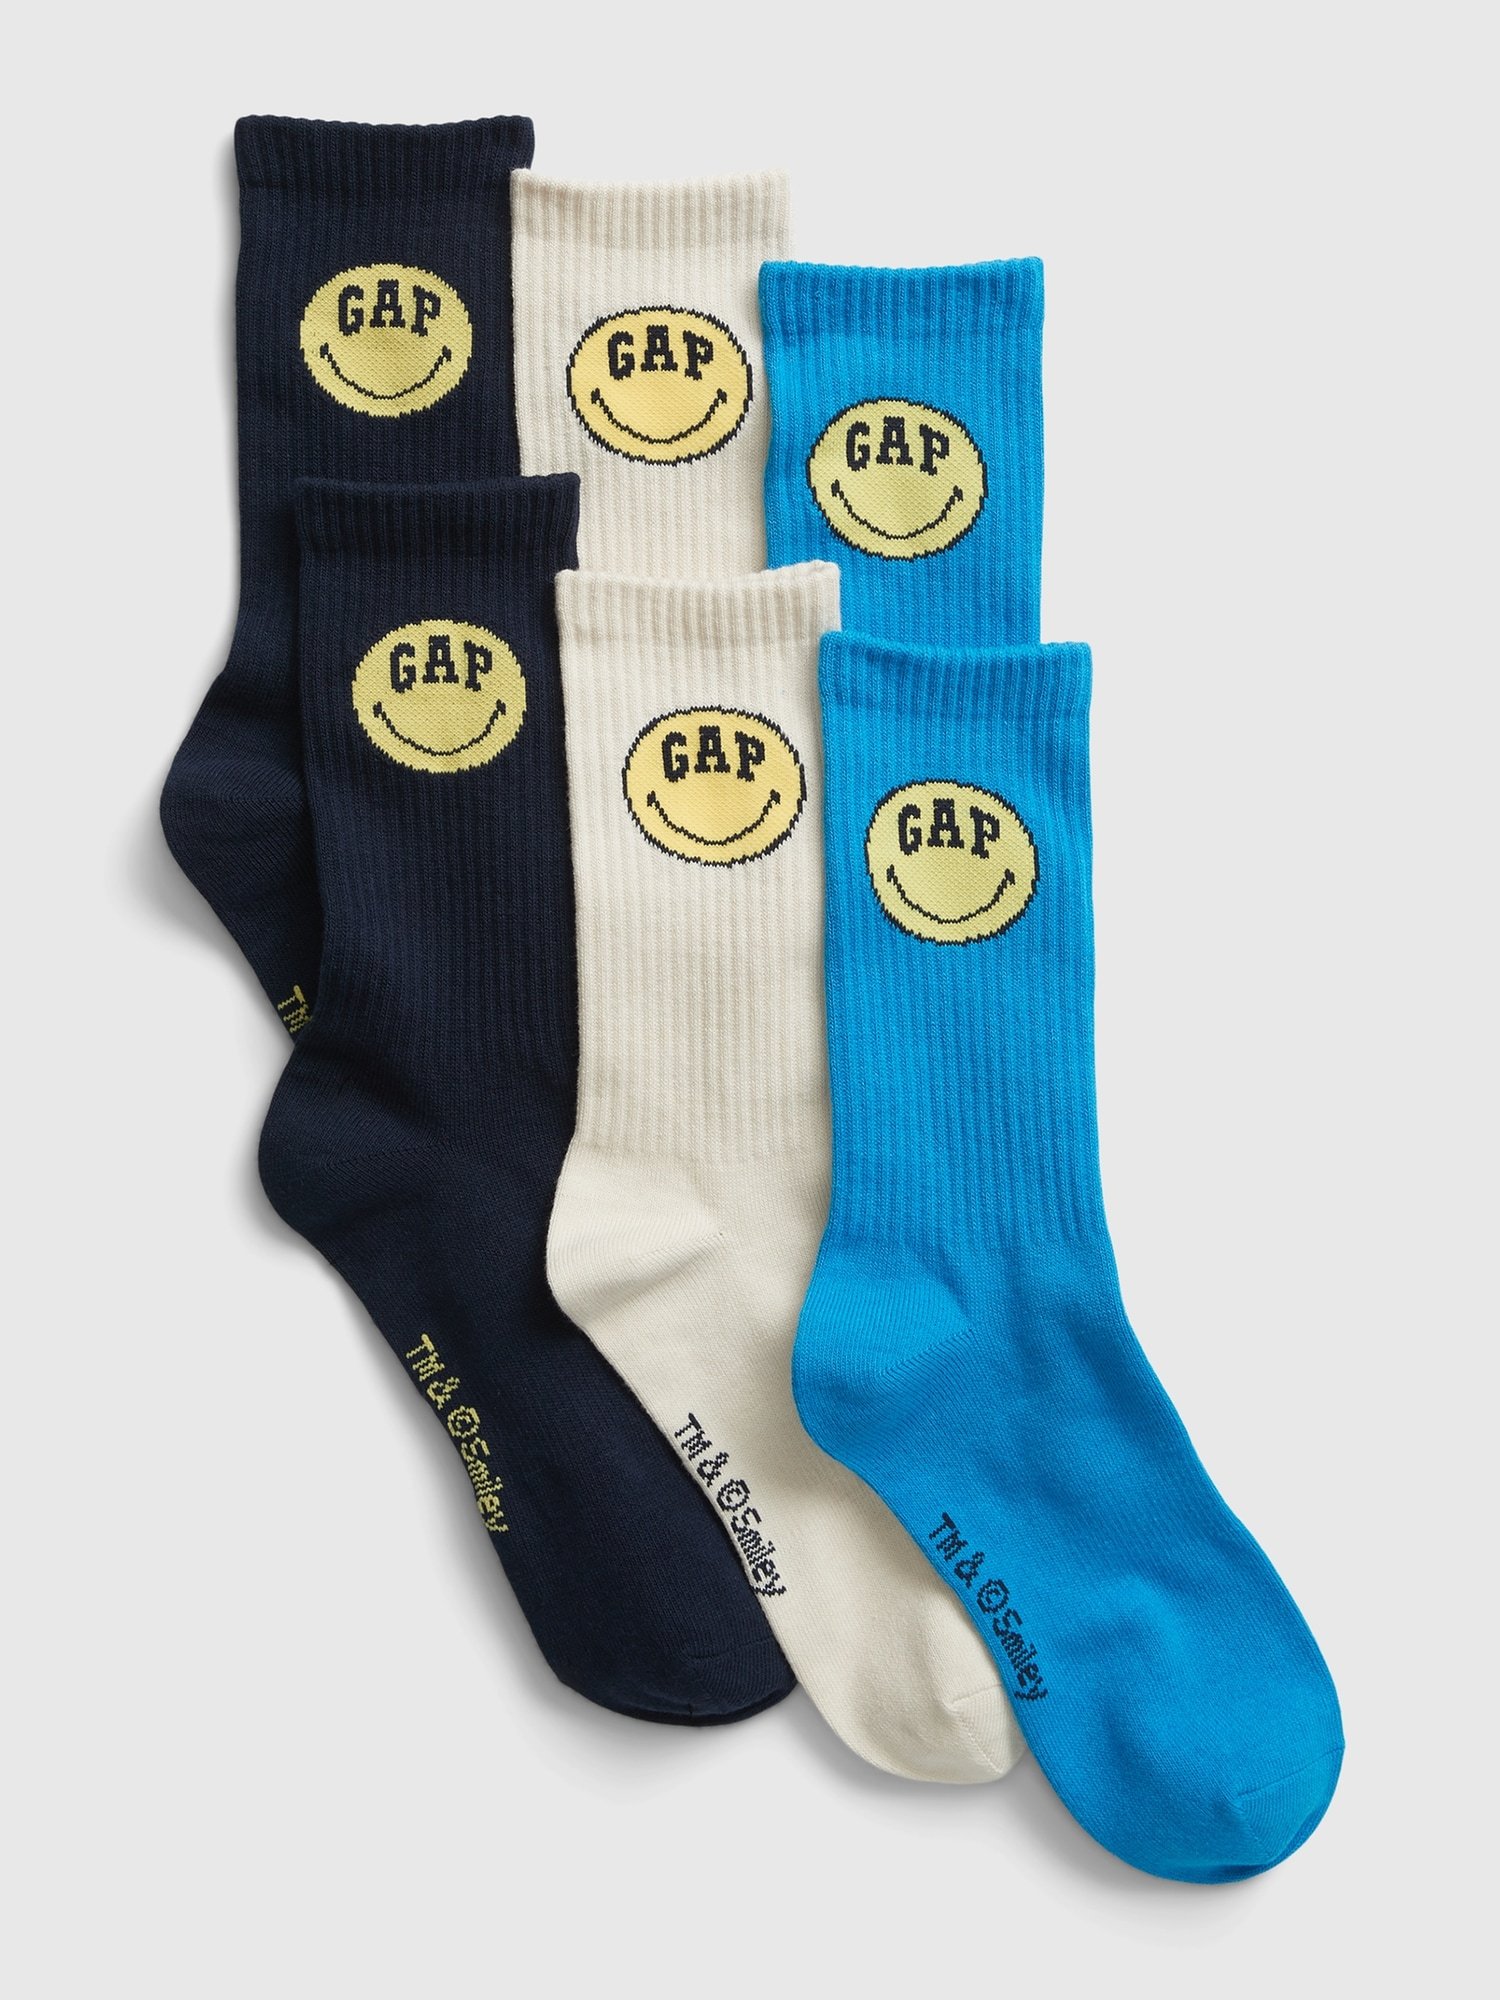 Gap x Smiley® Crew Socks P1650.jpg